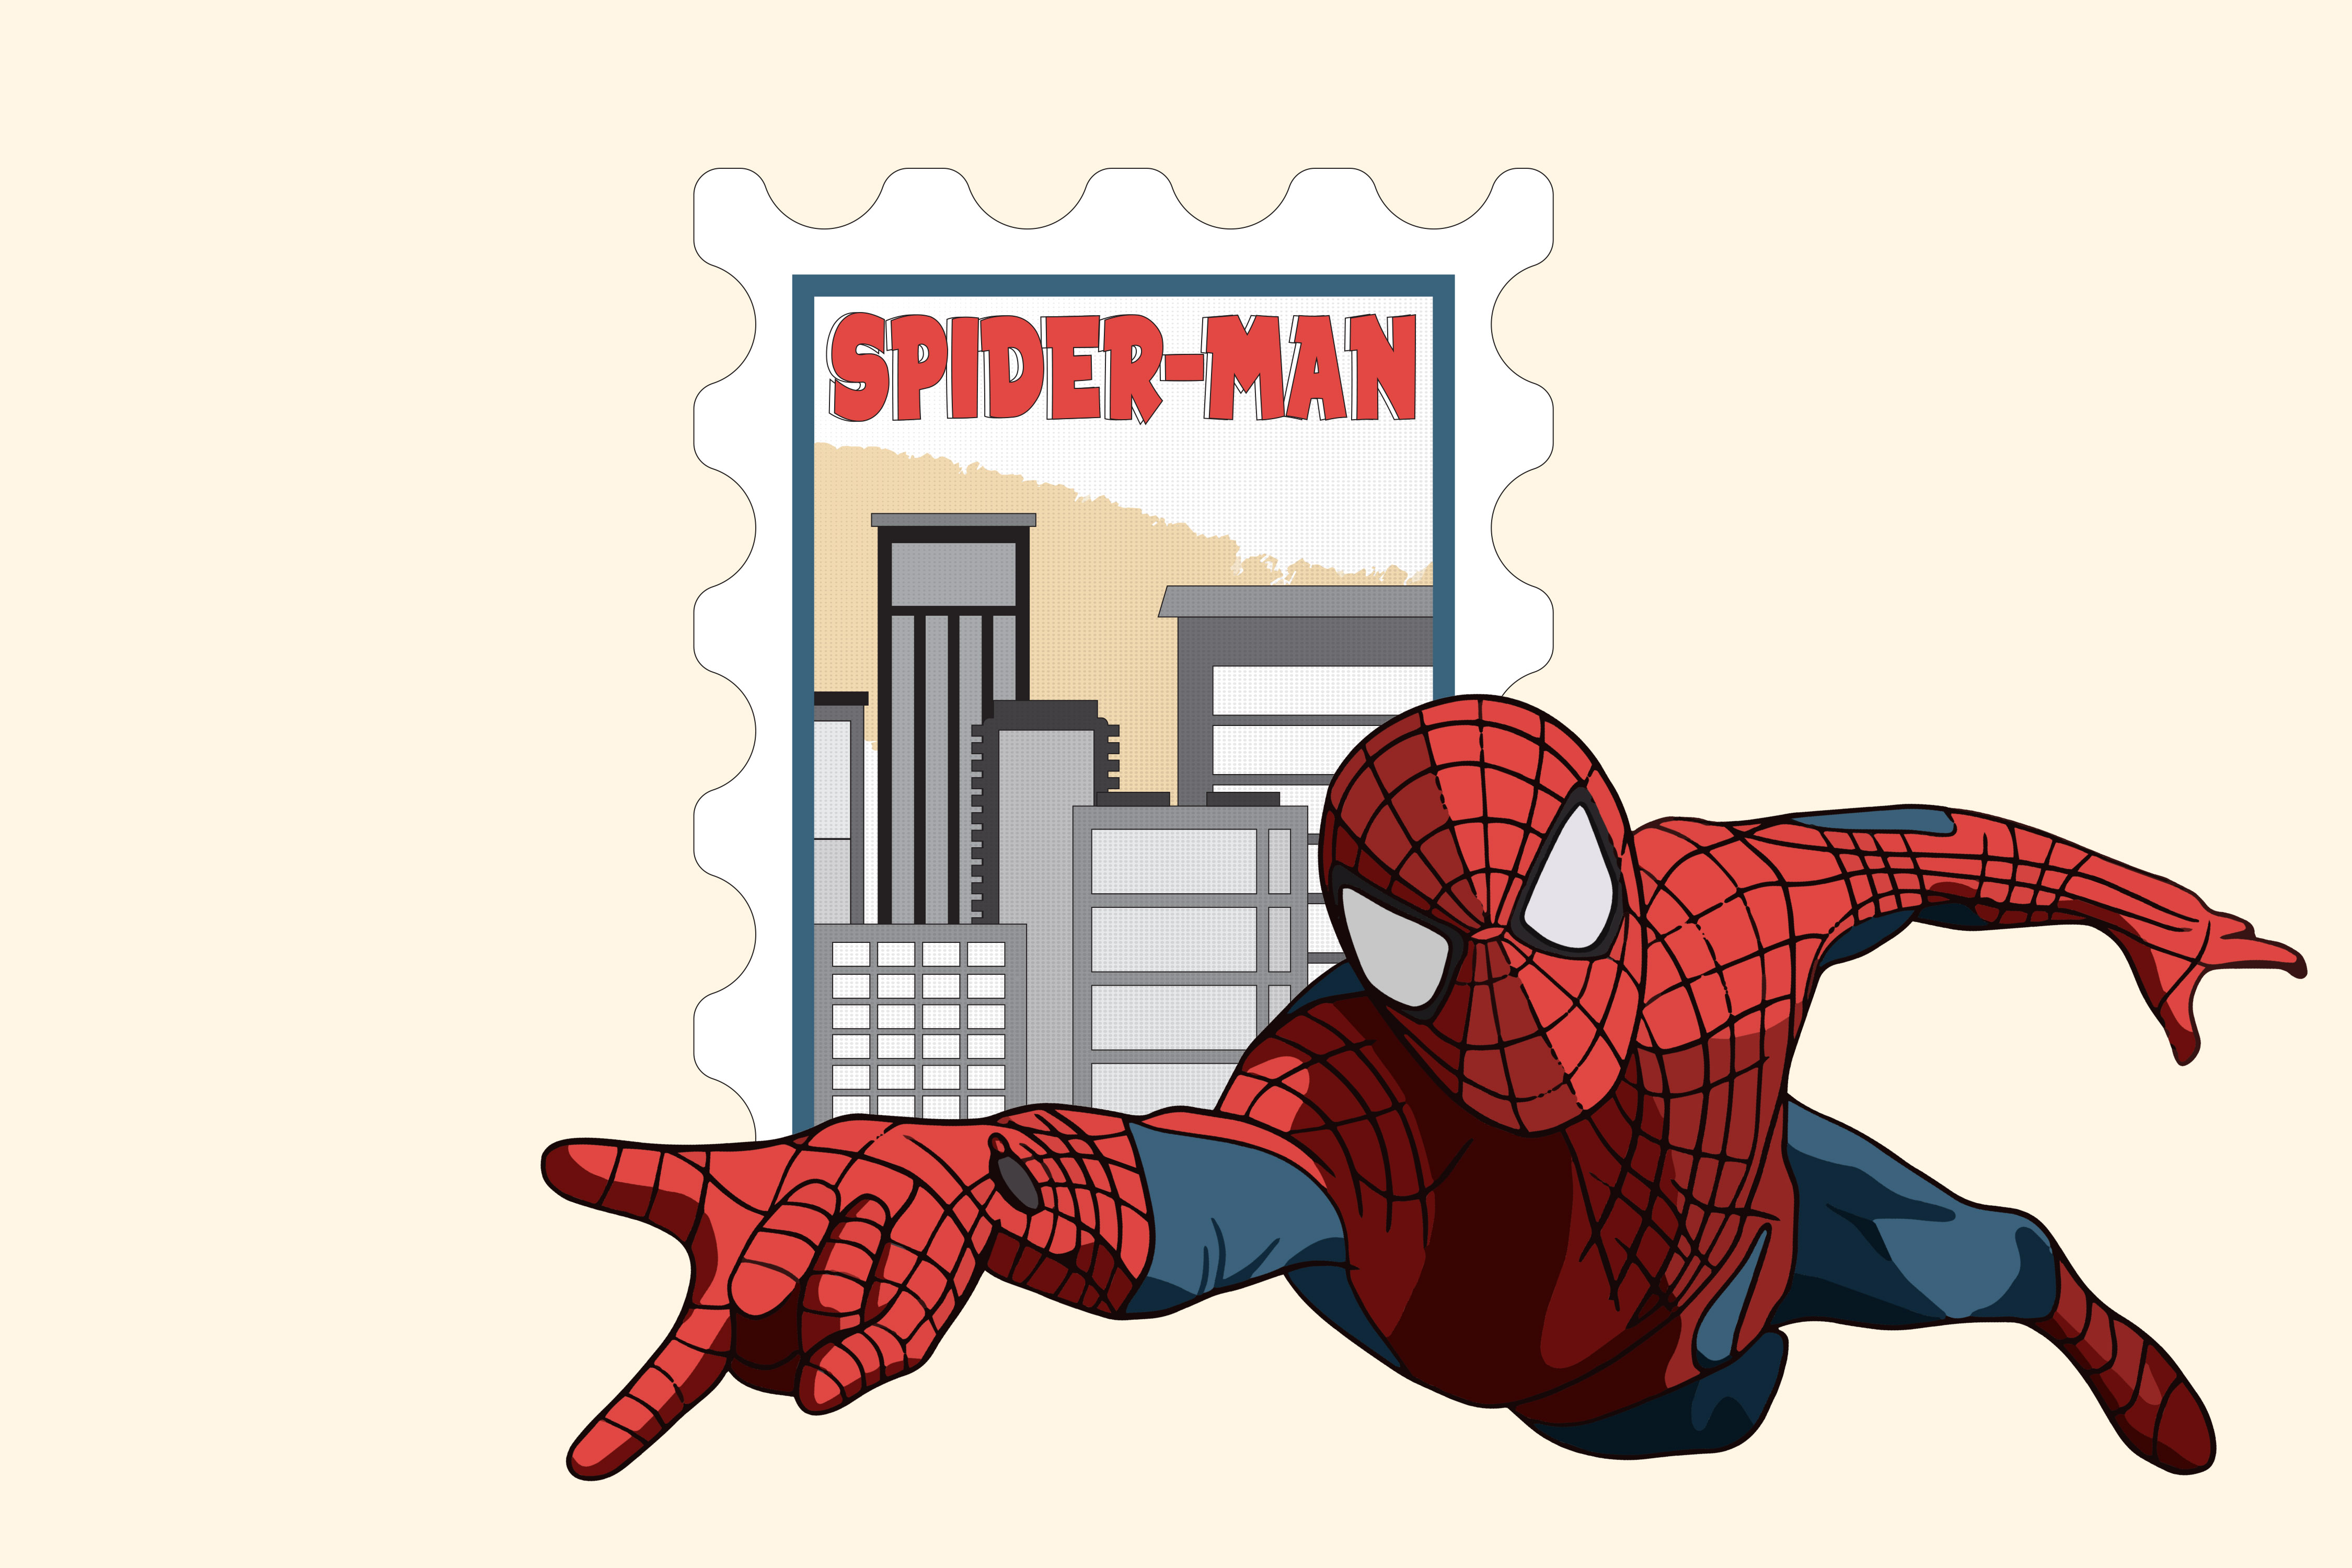 Spider-man stamp and illustration